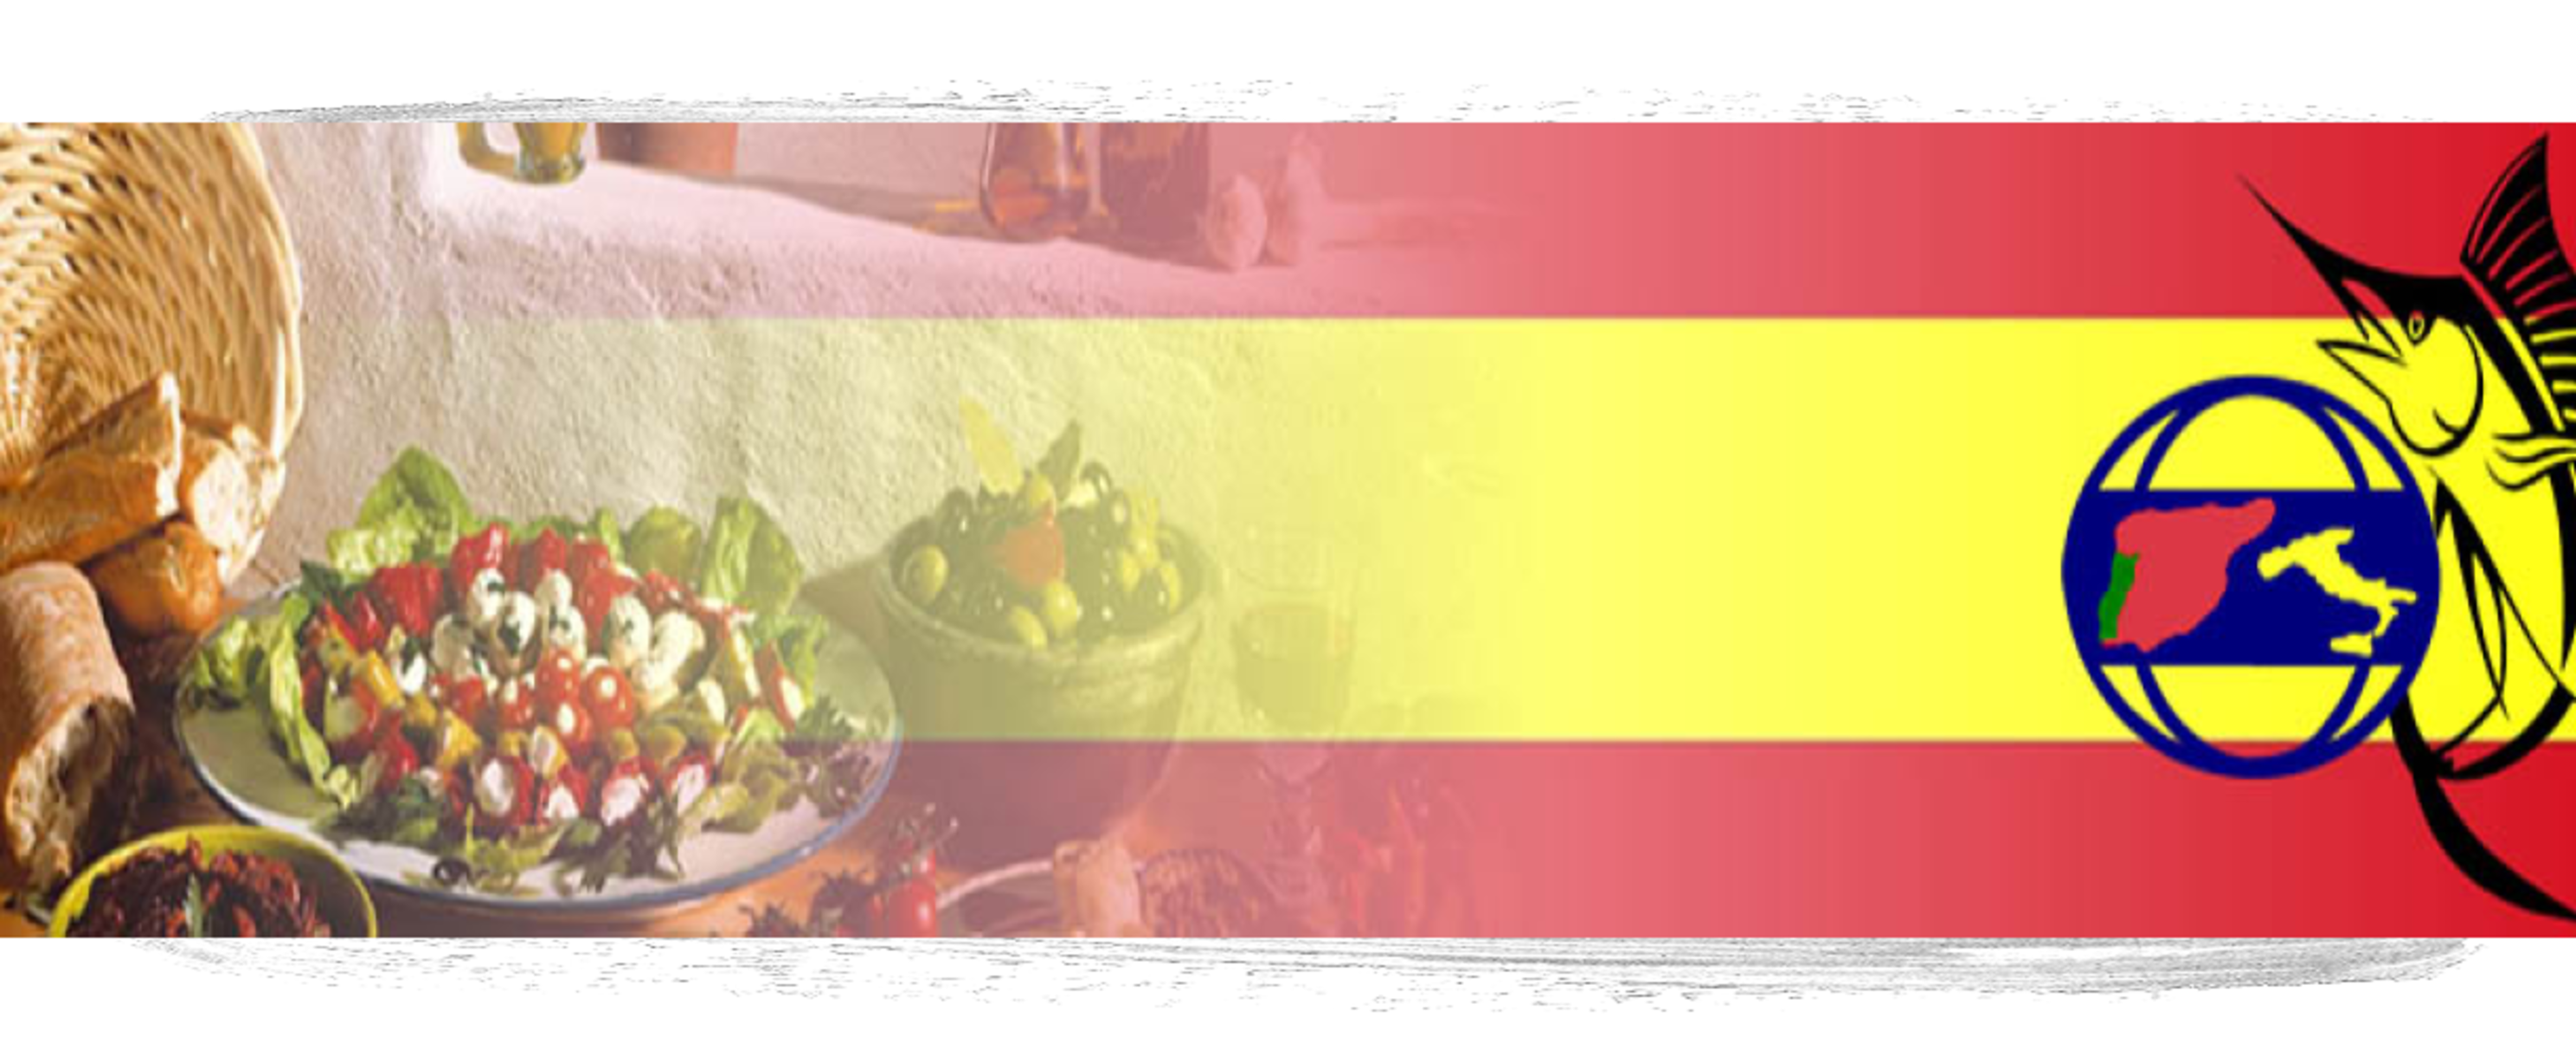 Spanische Delikatessen Merca